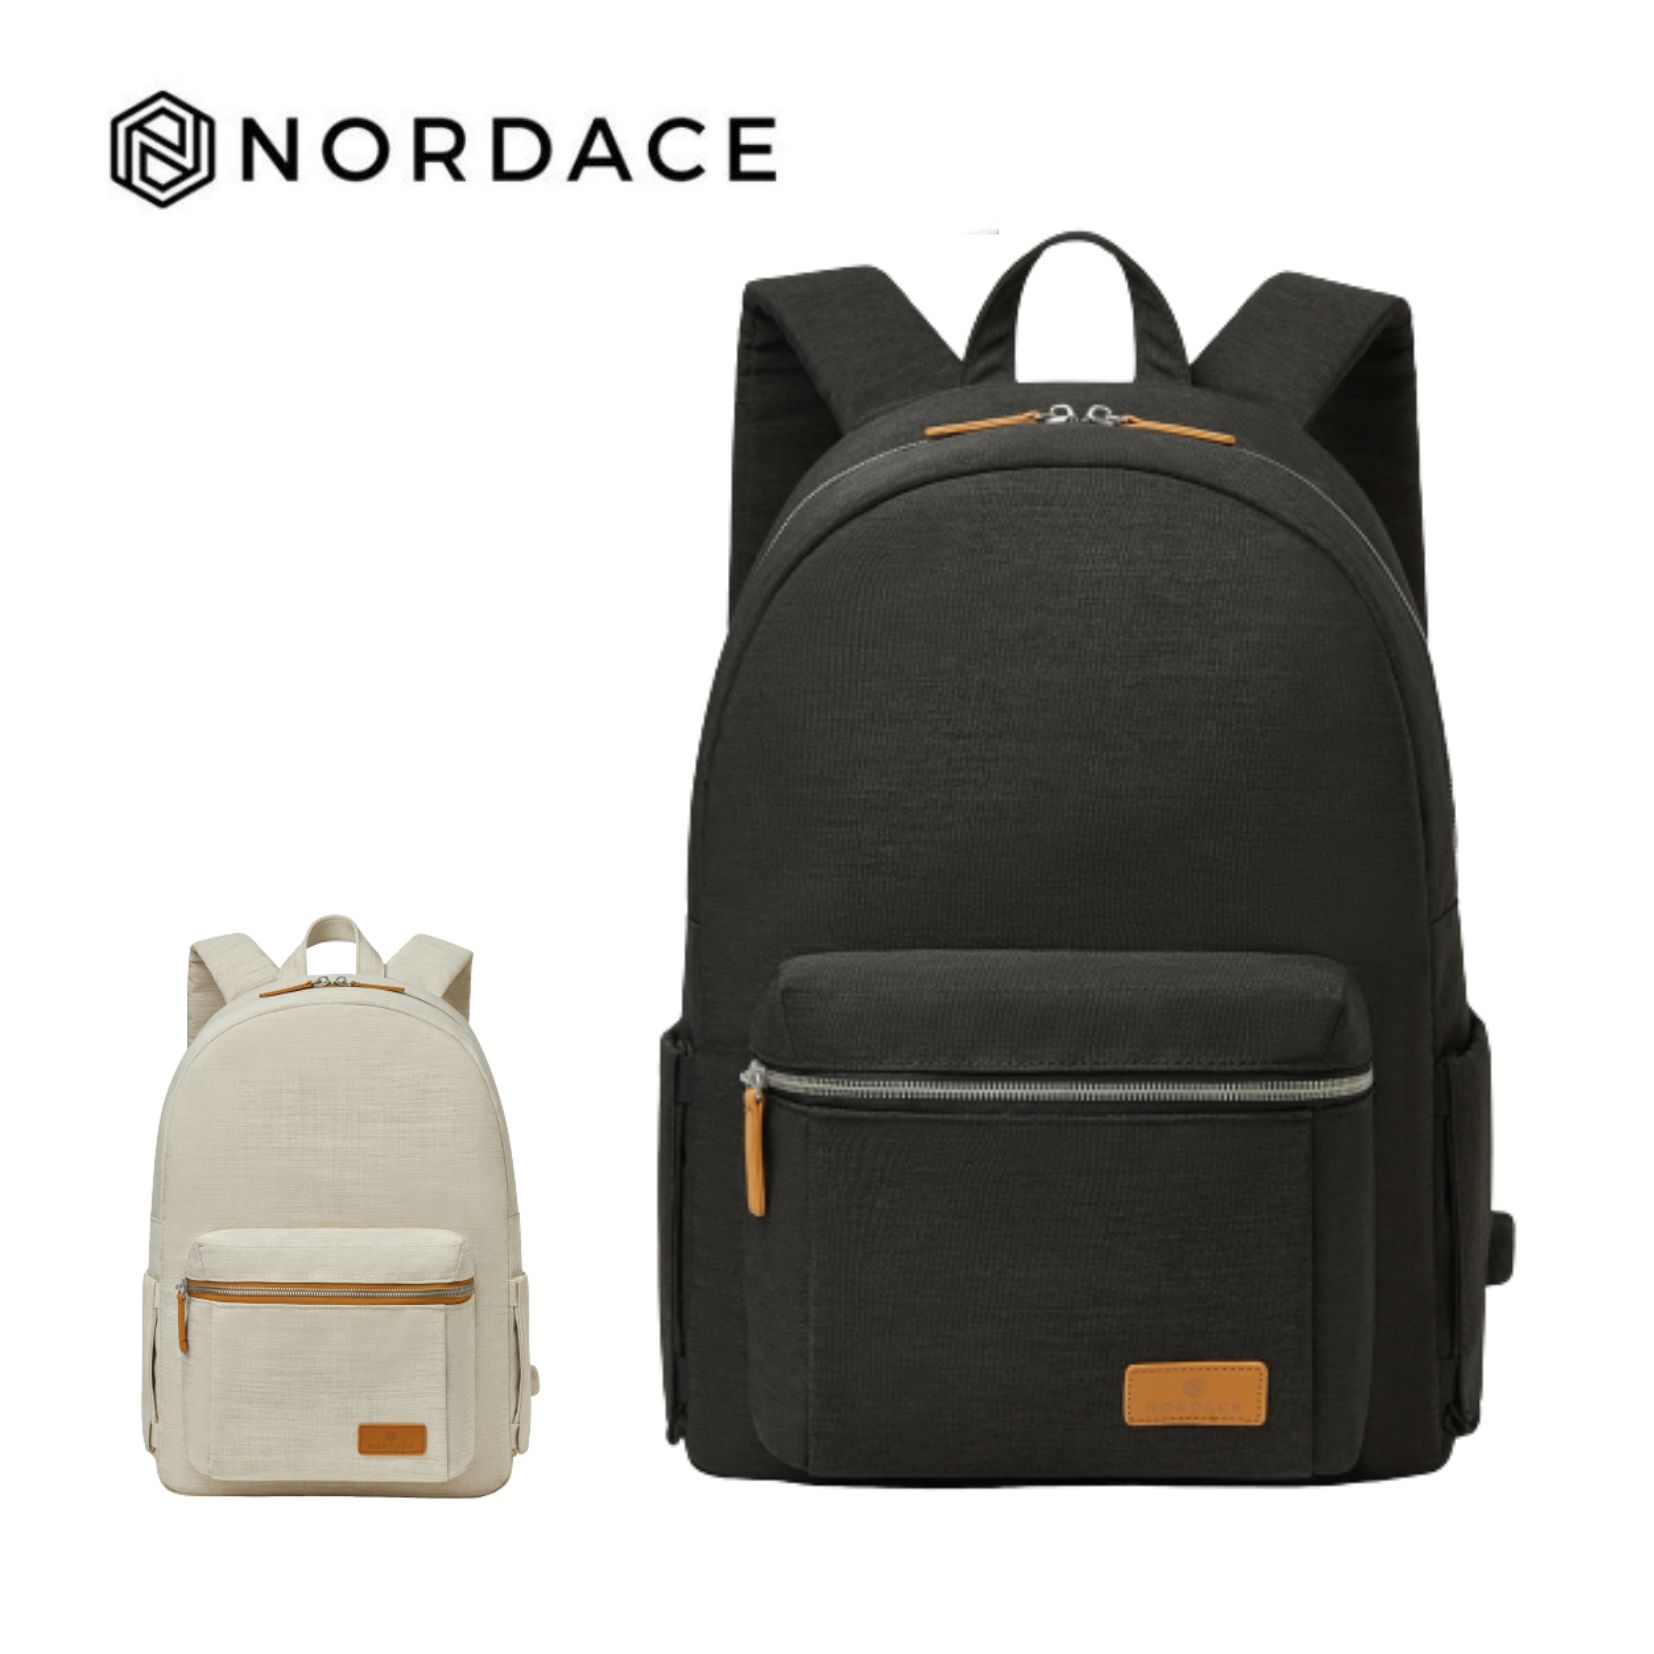 Nordace Siena Pro 後背包 雙肩包男女百搭通勤背包 側背包 防潑水 兩色可選-黑色 經典